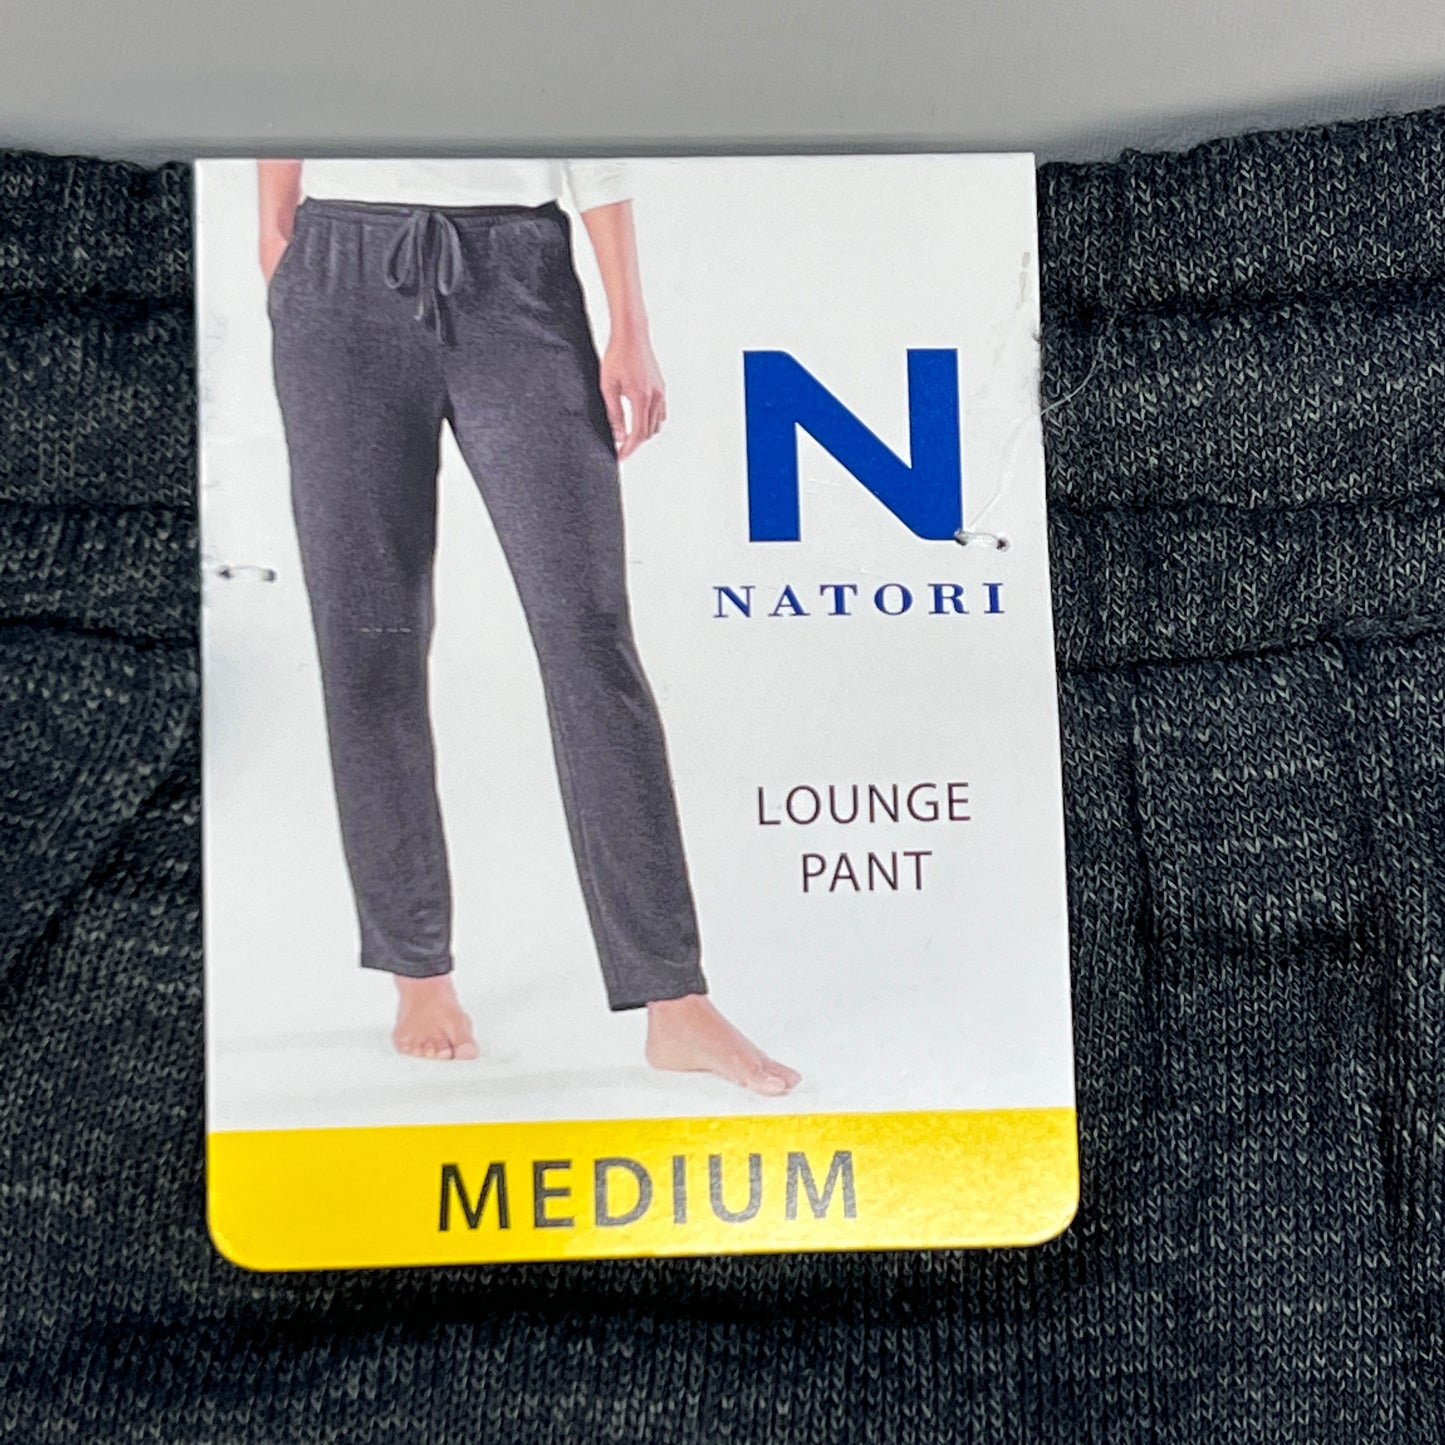 NATORI Soft Stretch Knit Lounge Pant Ankle Length Women's Sz M Heather Black NC7208Y (New)